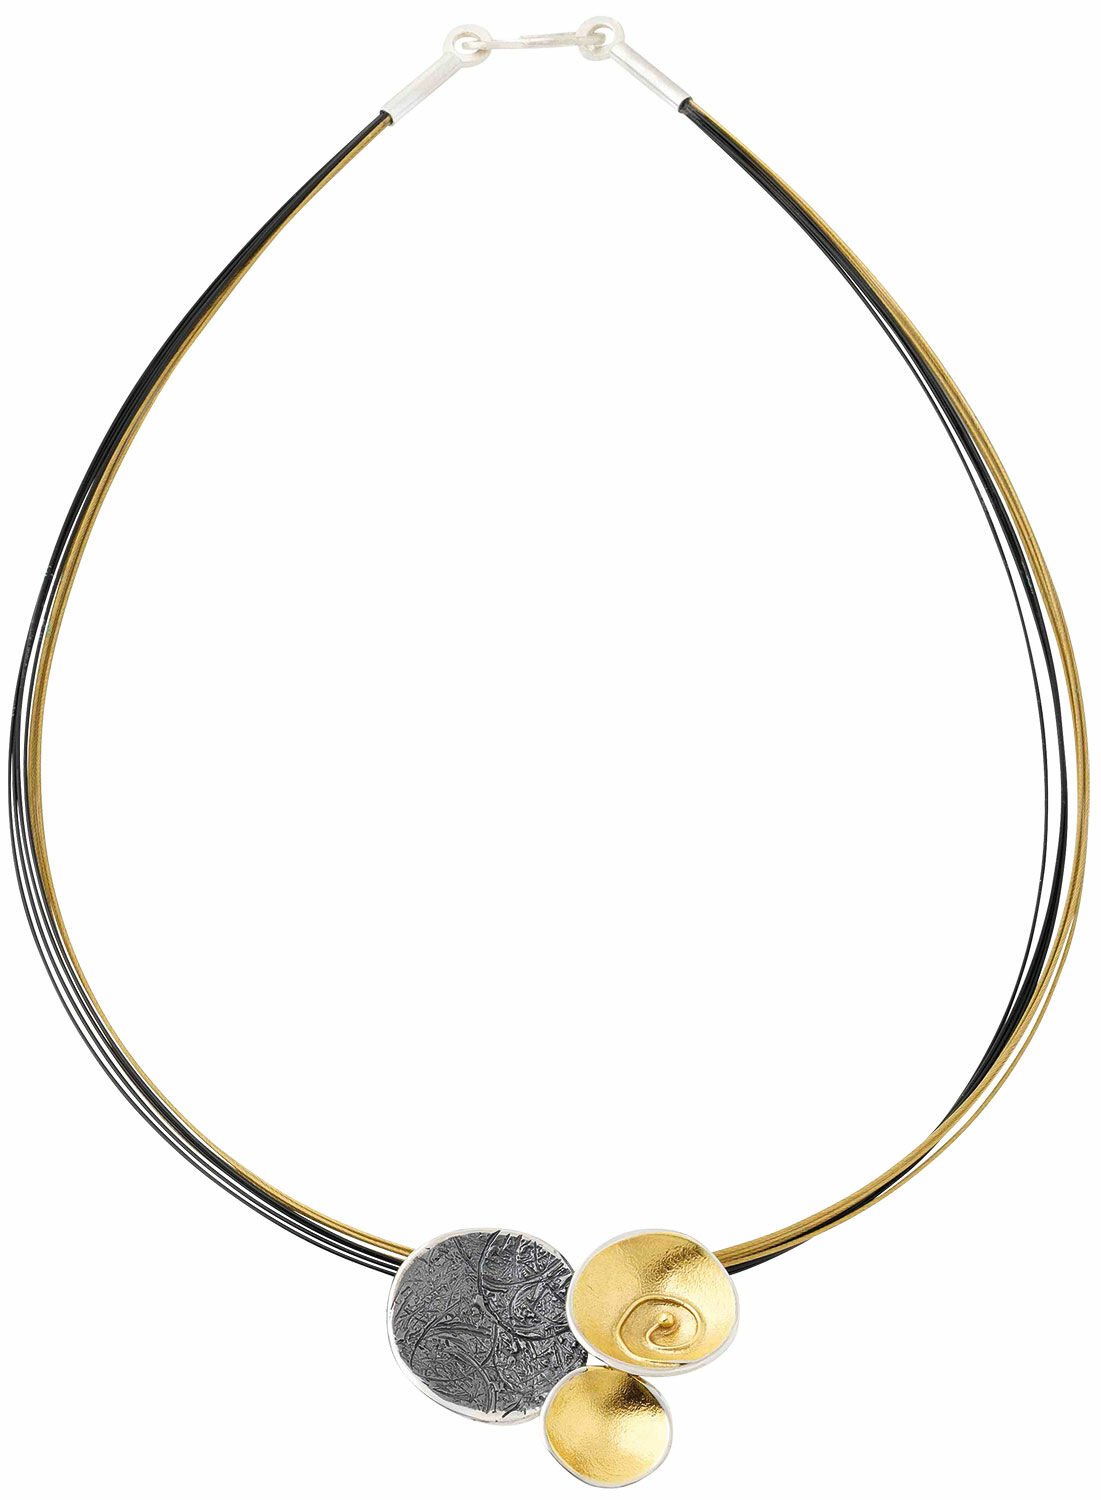 Necklace "Kalliope"